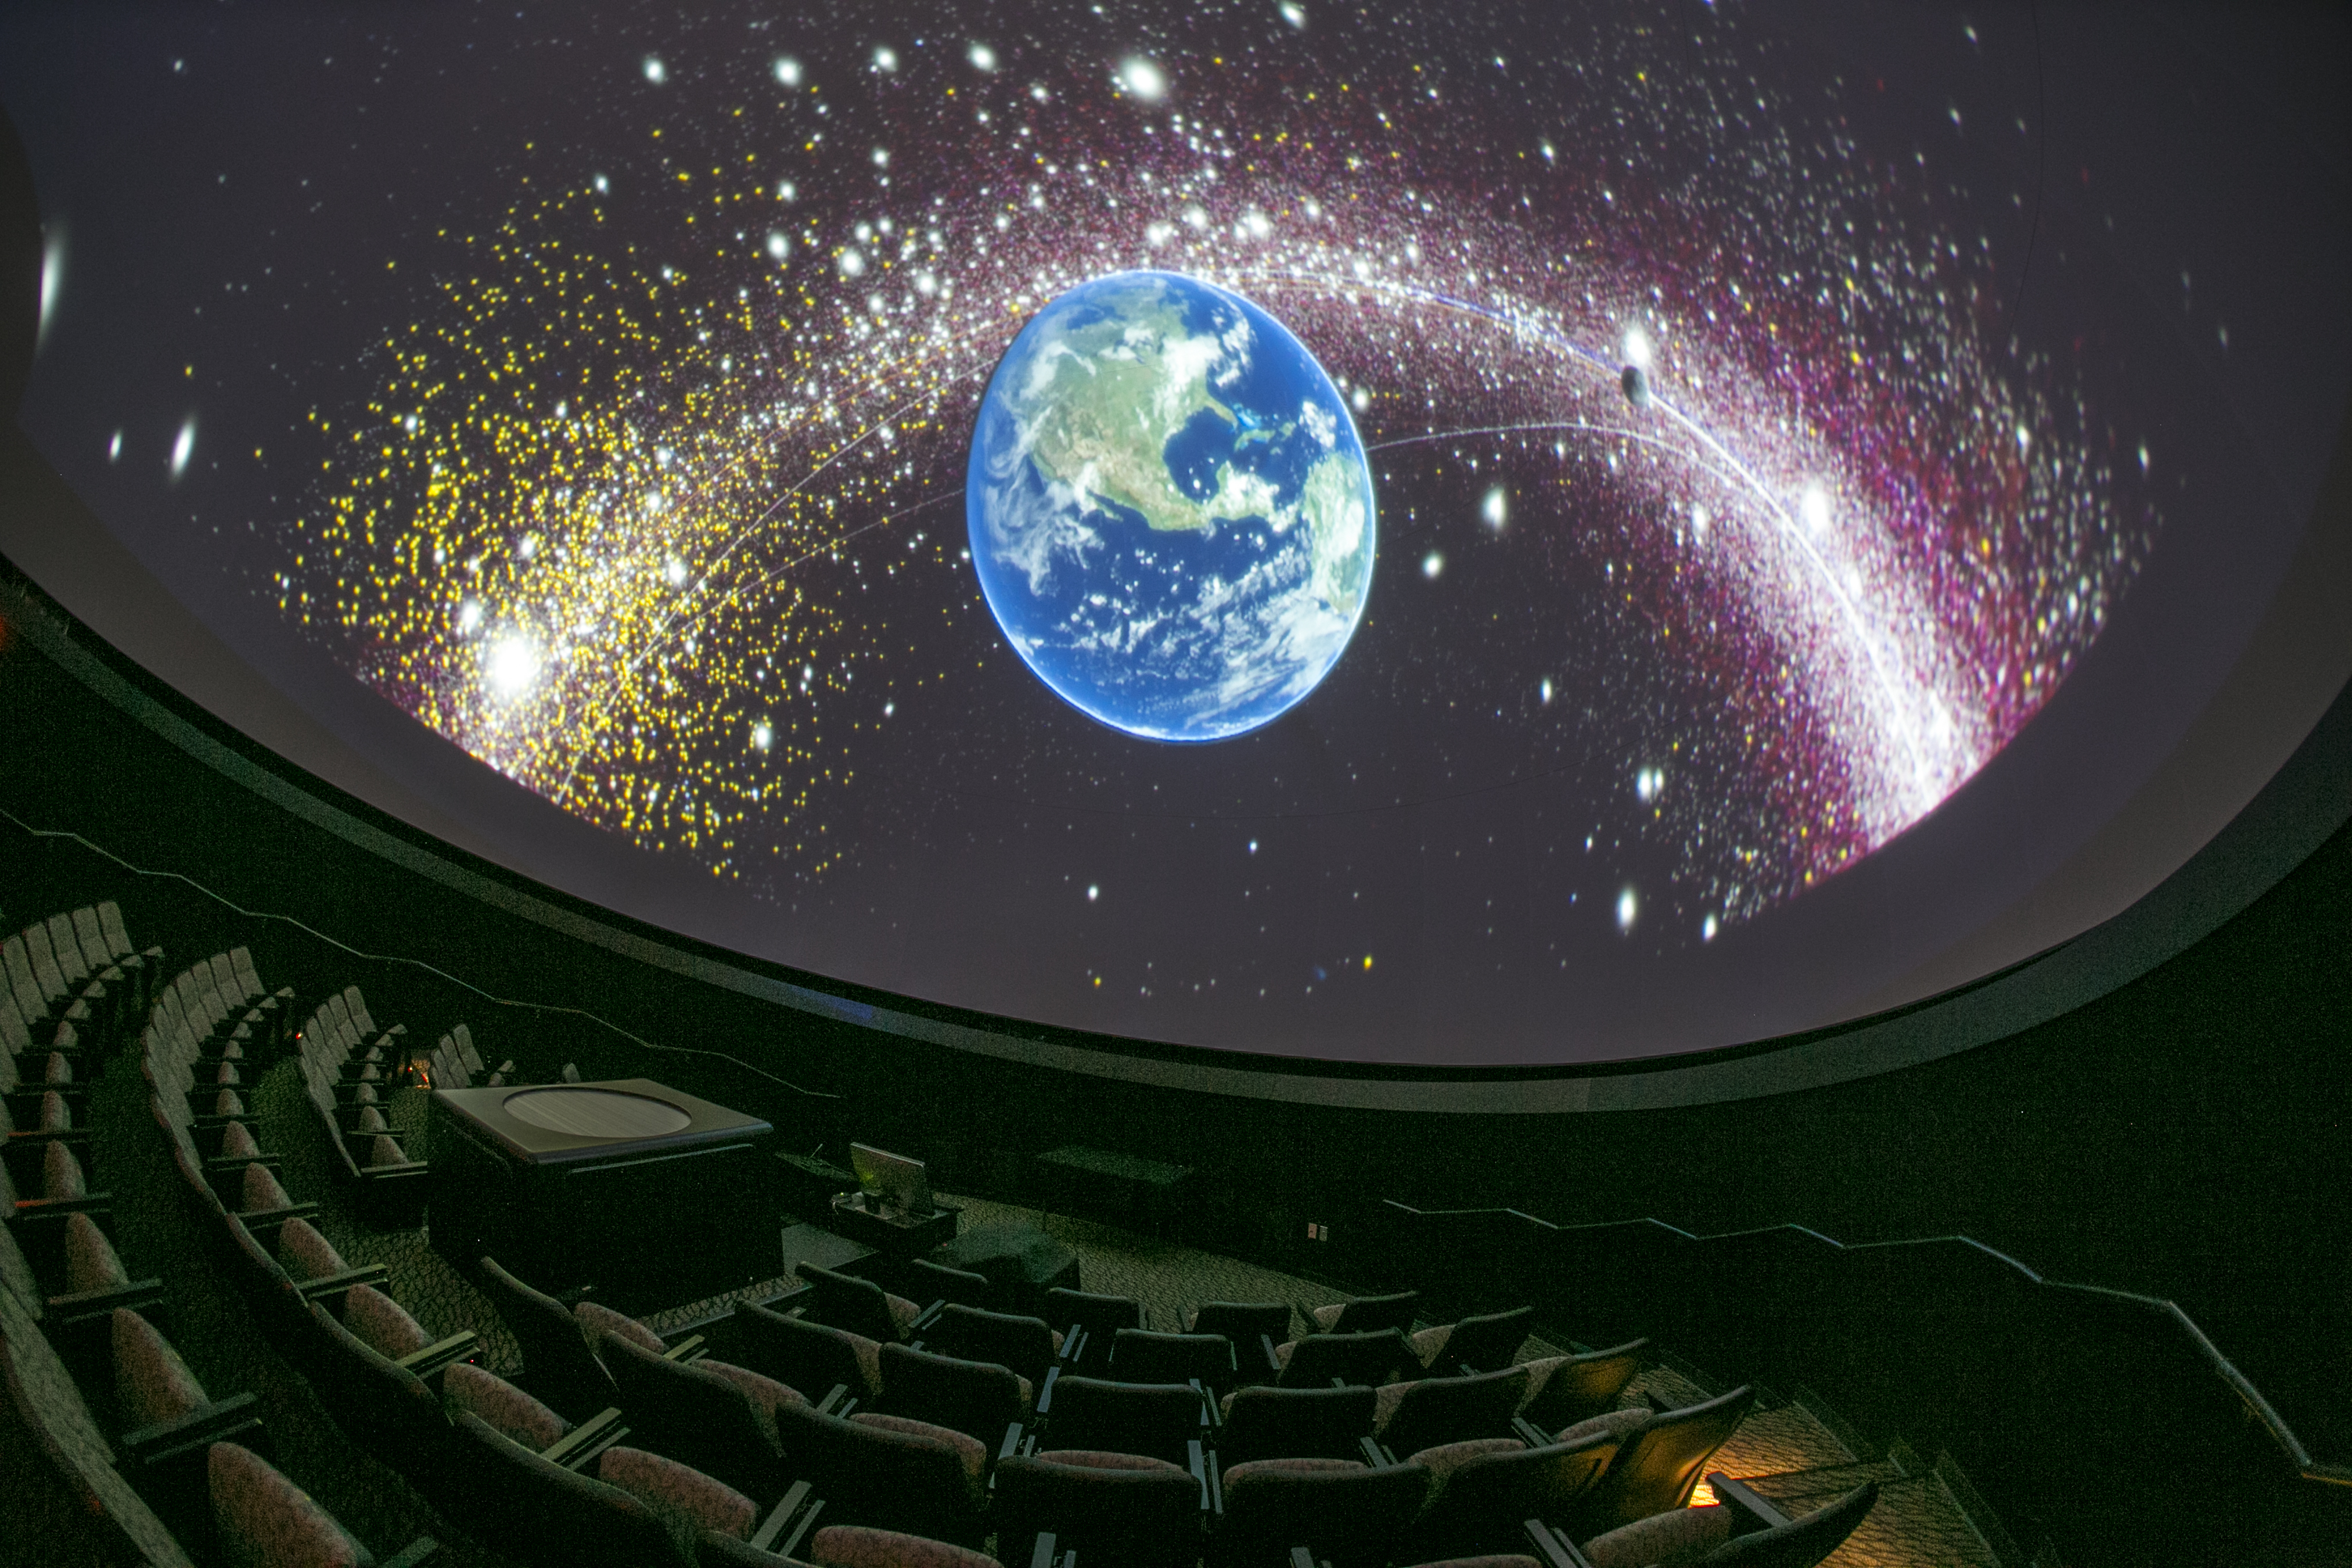 Christenberry Planetarium